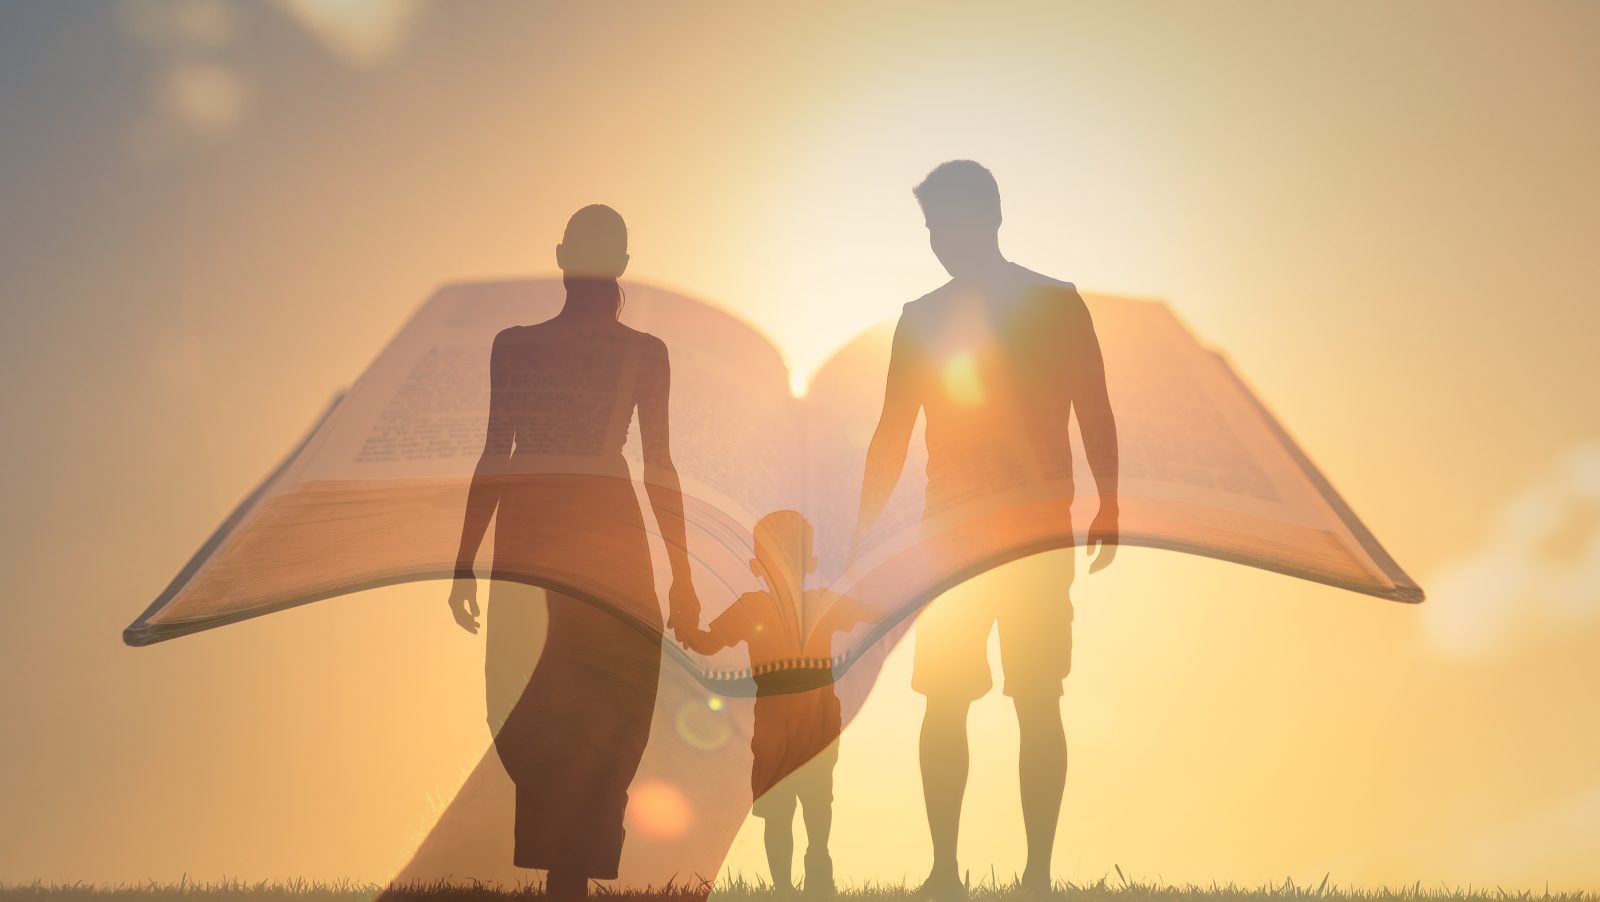 Family religious belief and faith